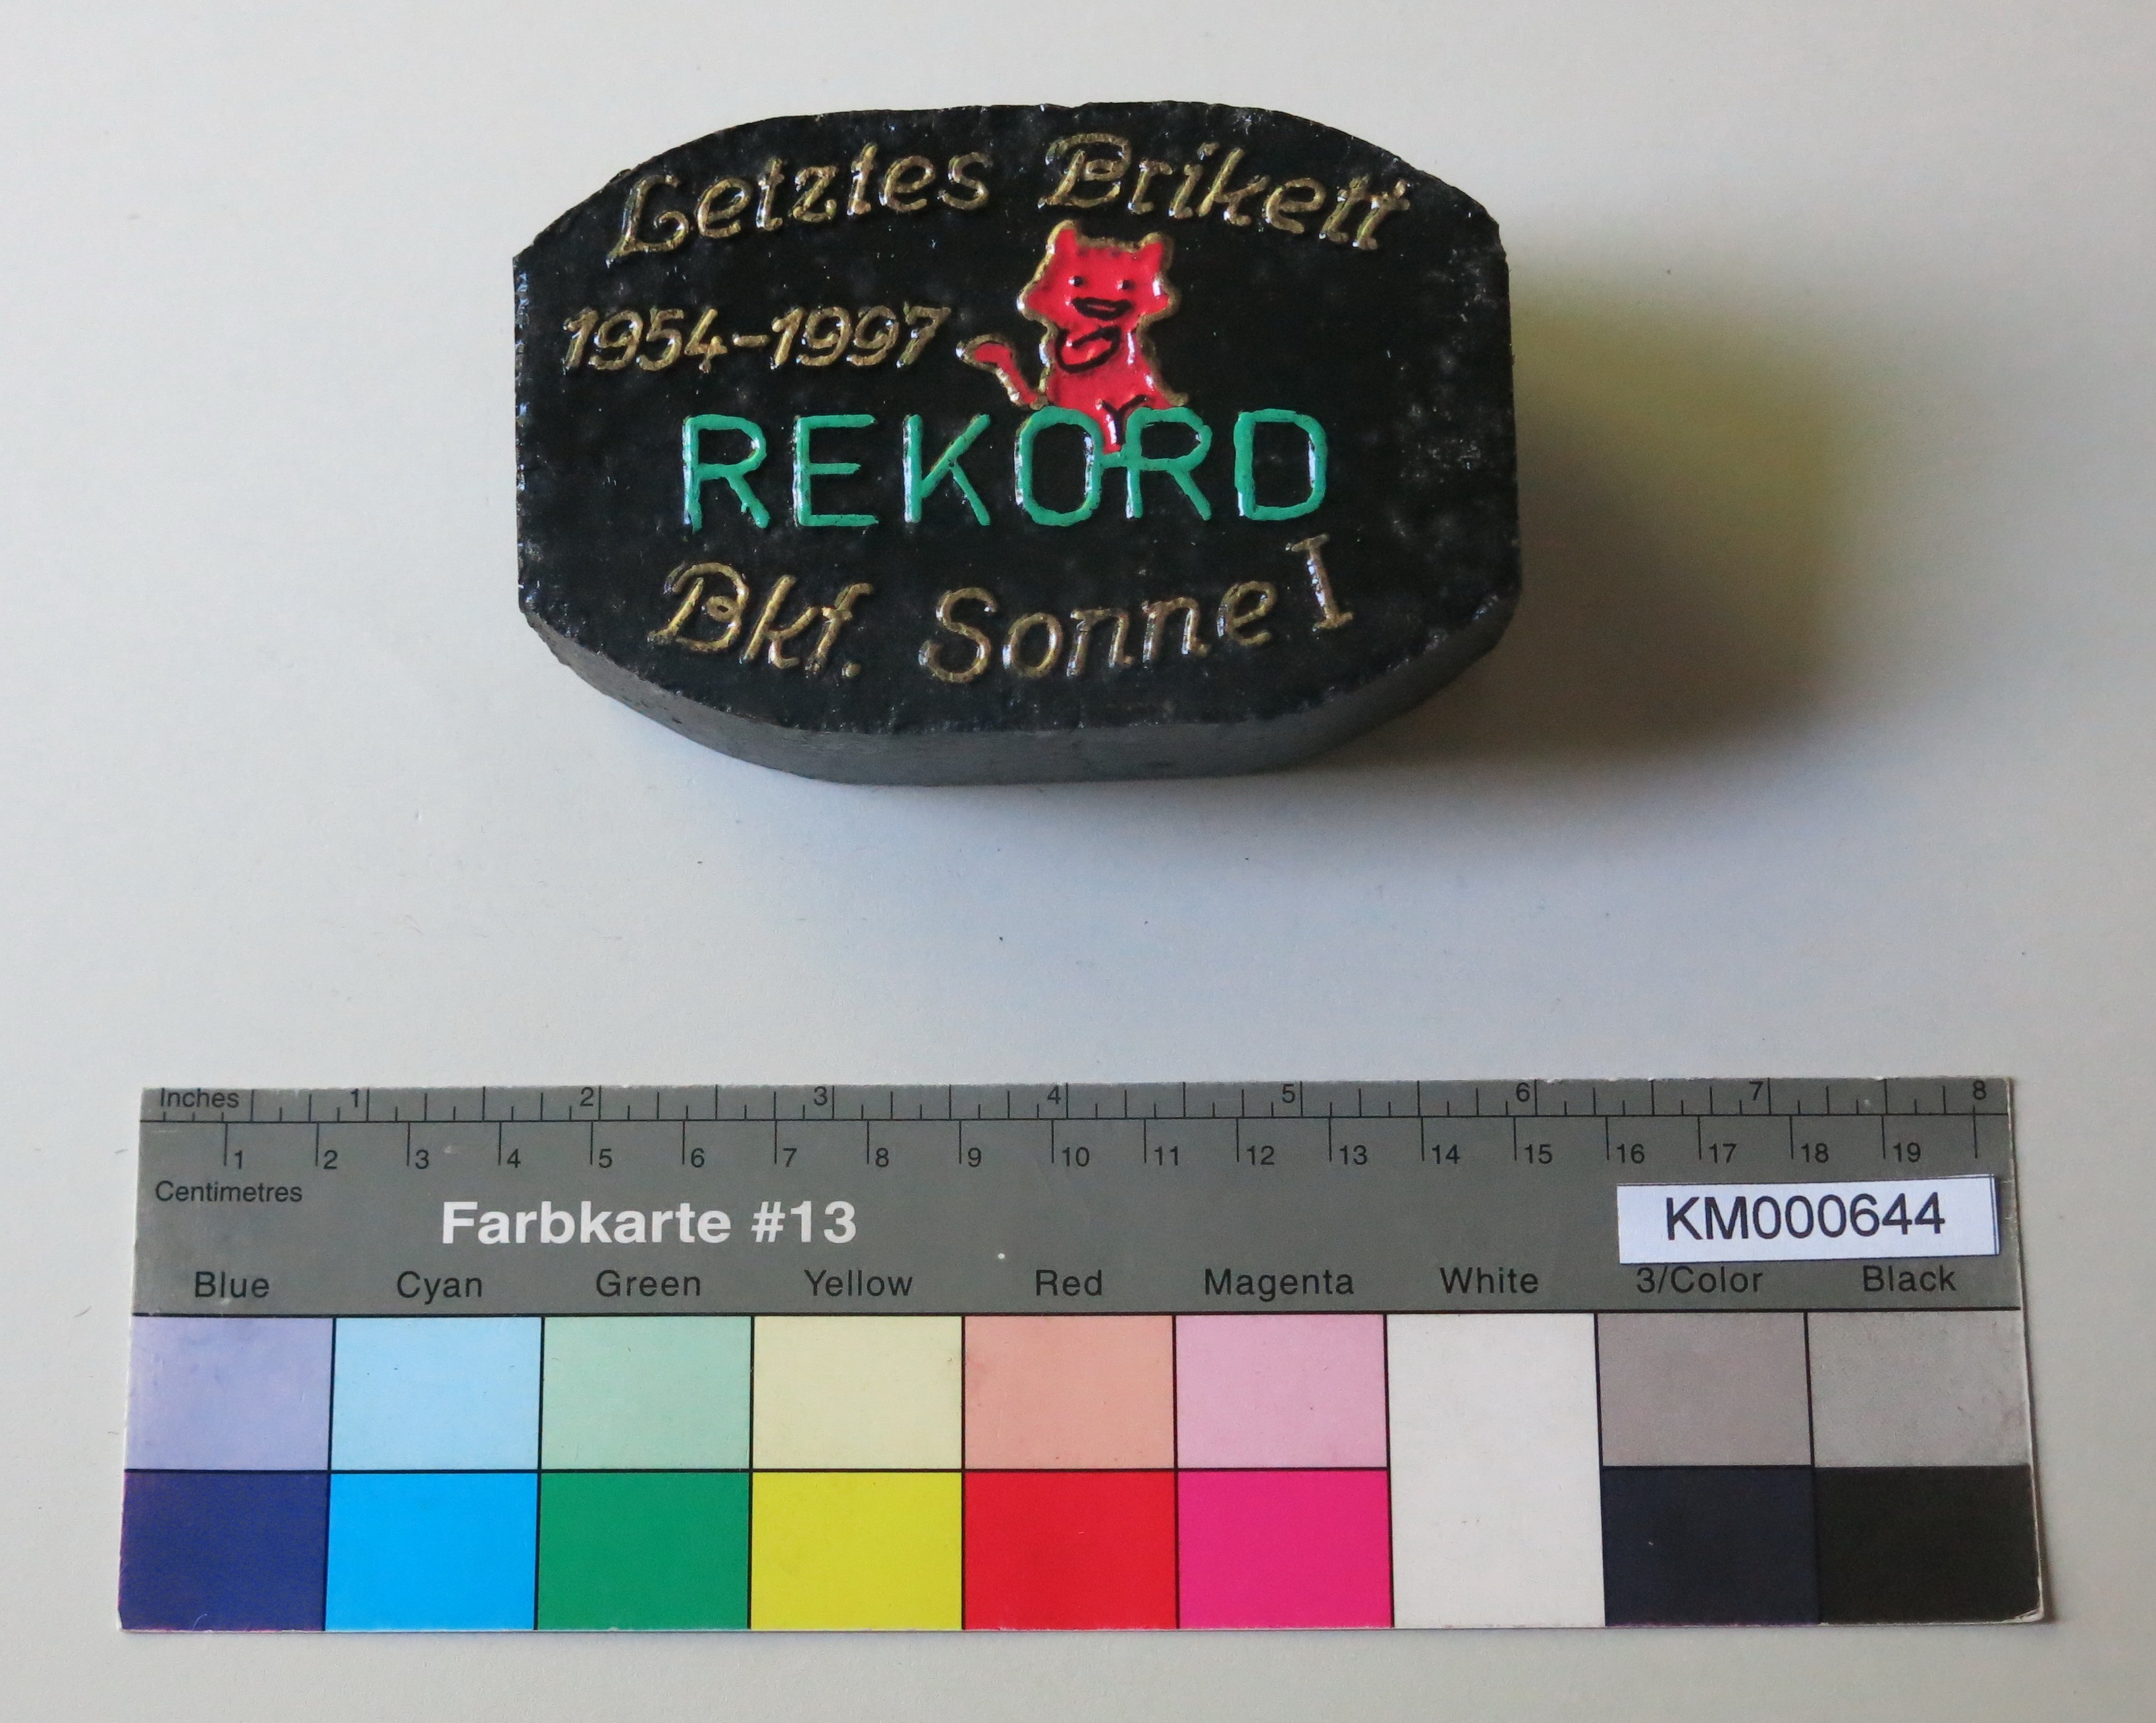 Zierbrikett "Letztes Brikett 1954-1997 REKORD Bkf. Sonne (Energiefabrik Knappenrode CC BY-SA)